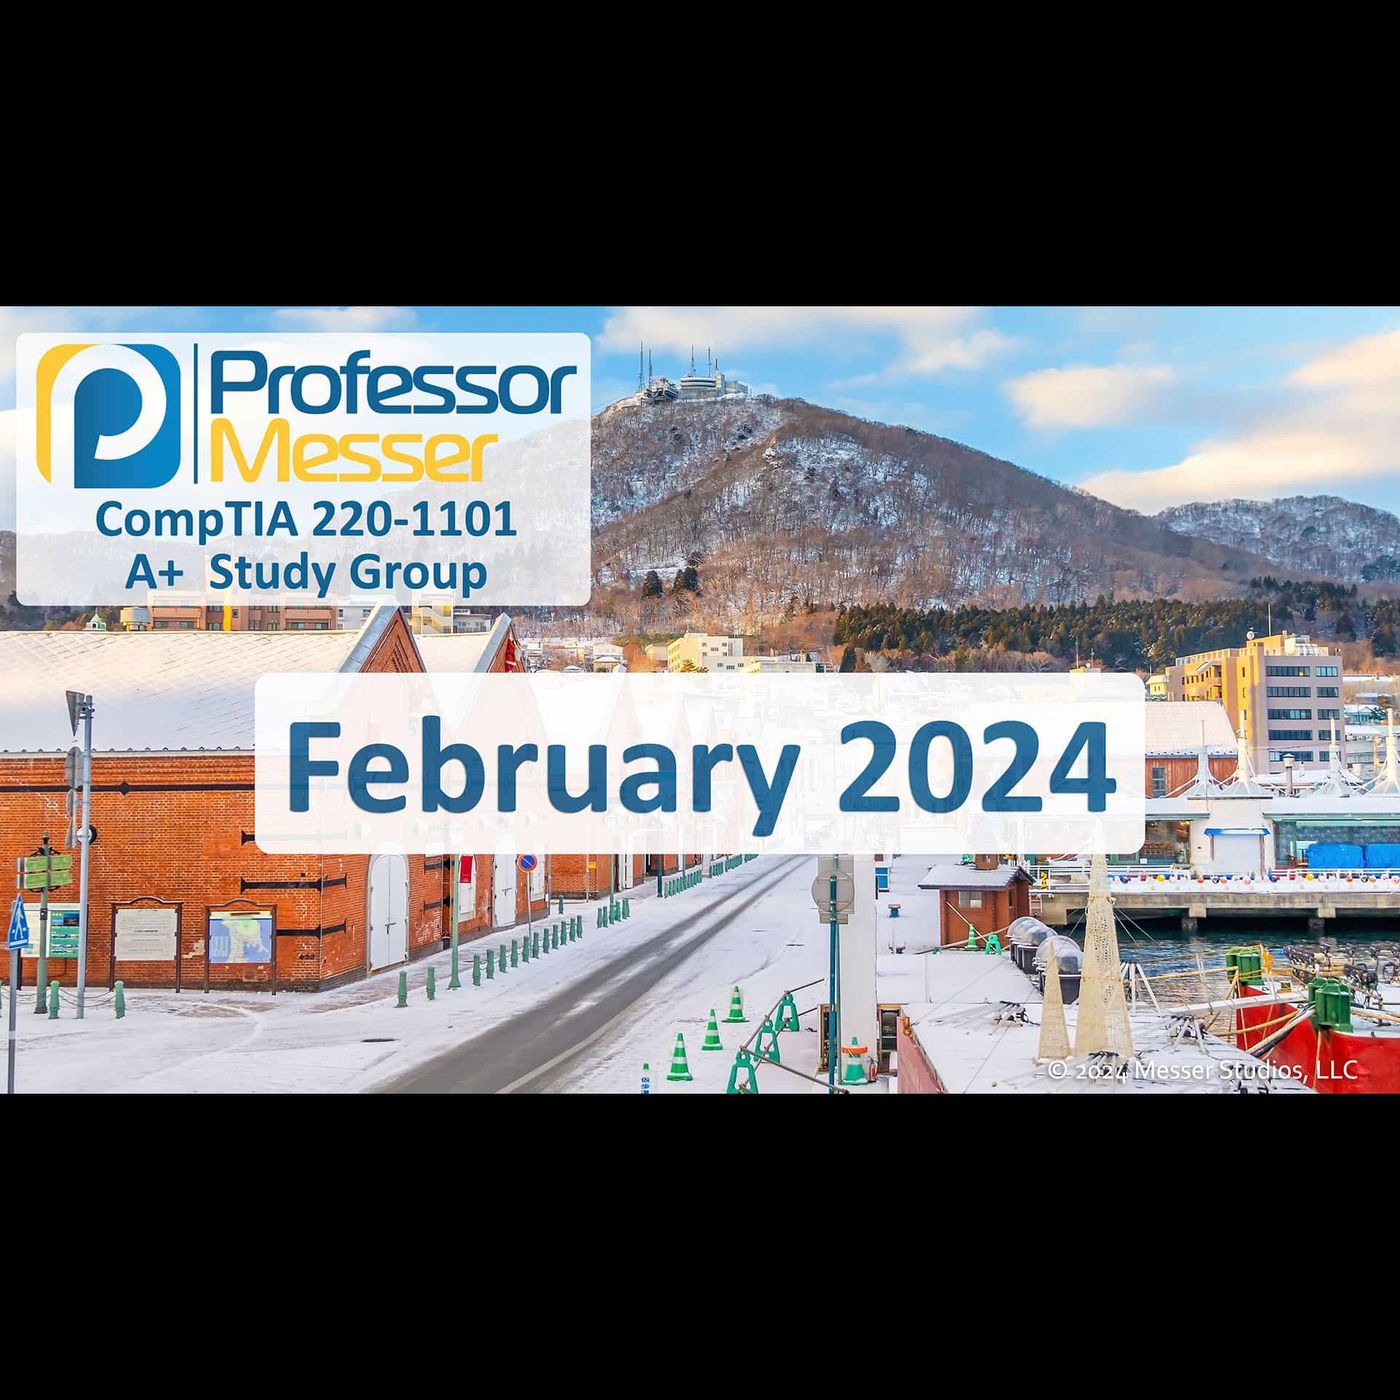 Professor Messer's CompTIA 220-1101 A+ Study Group - February 2024